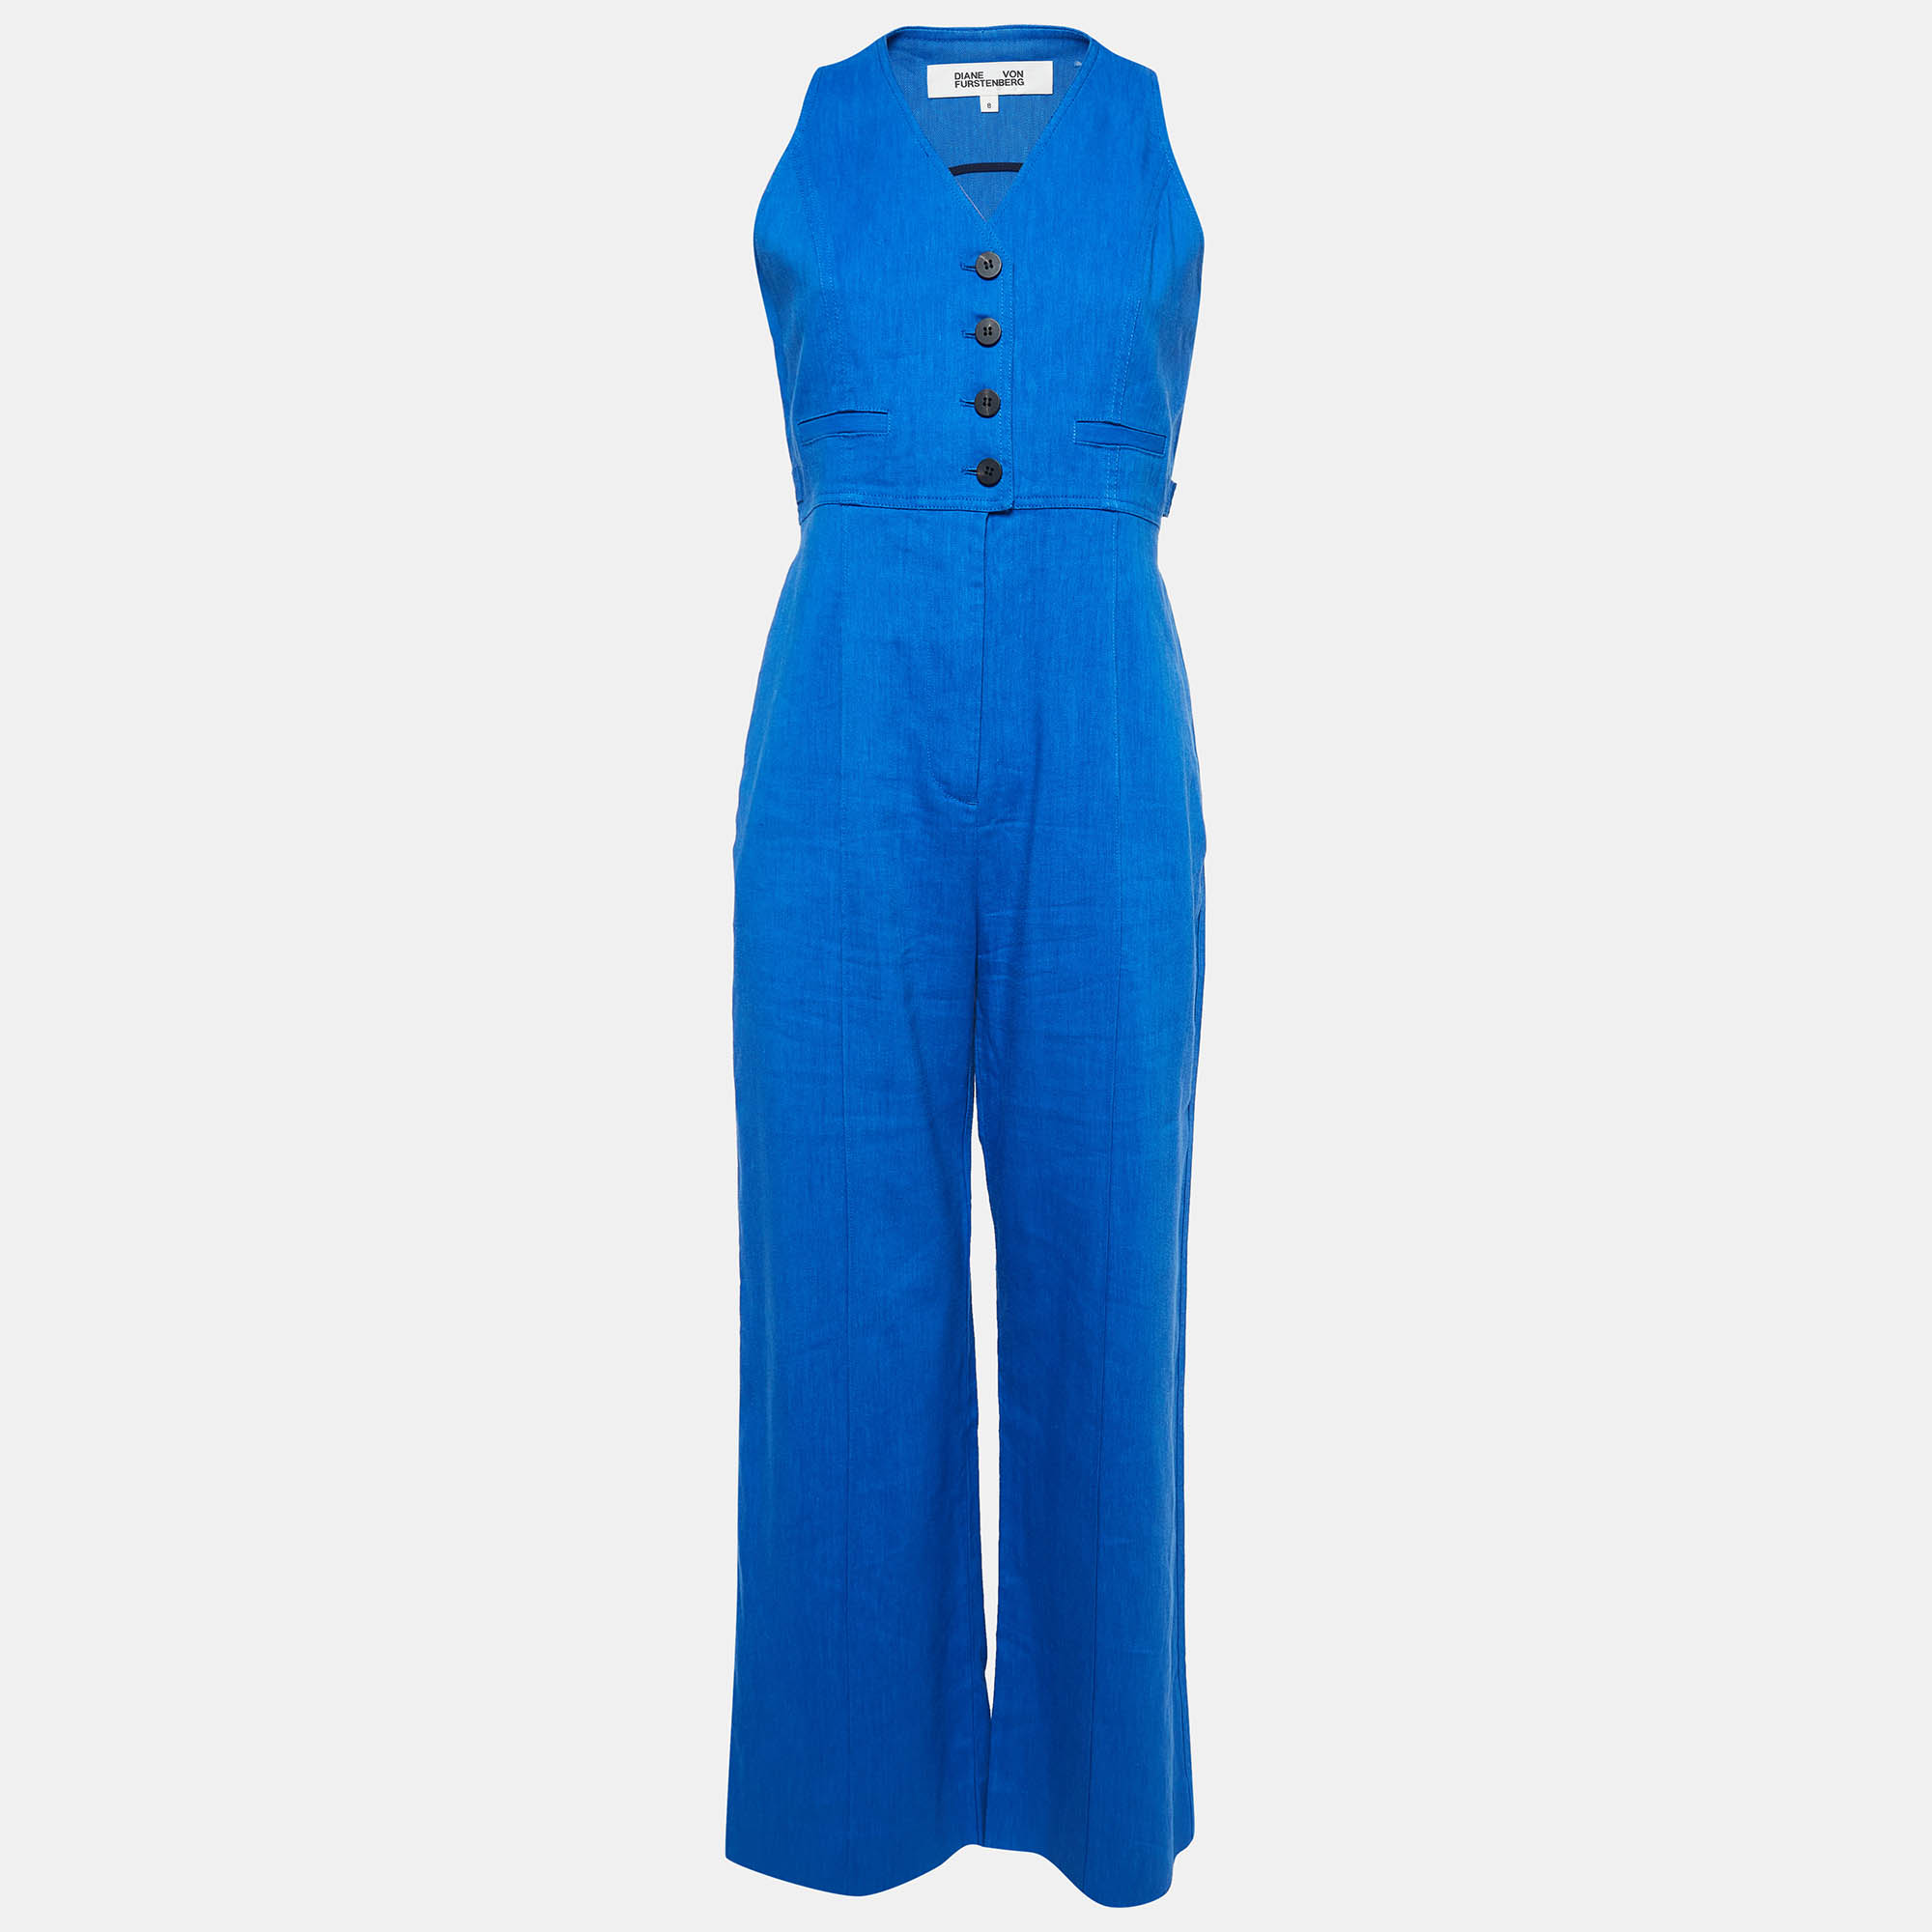 Diane von furstenberg blue linen blend sleeveless v-neck jumpsuit m